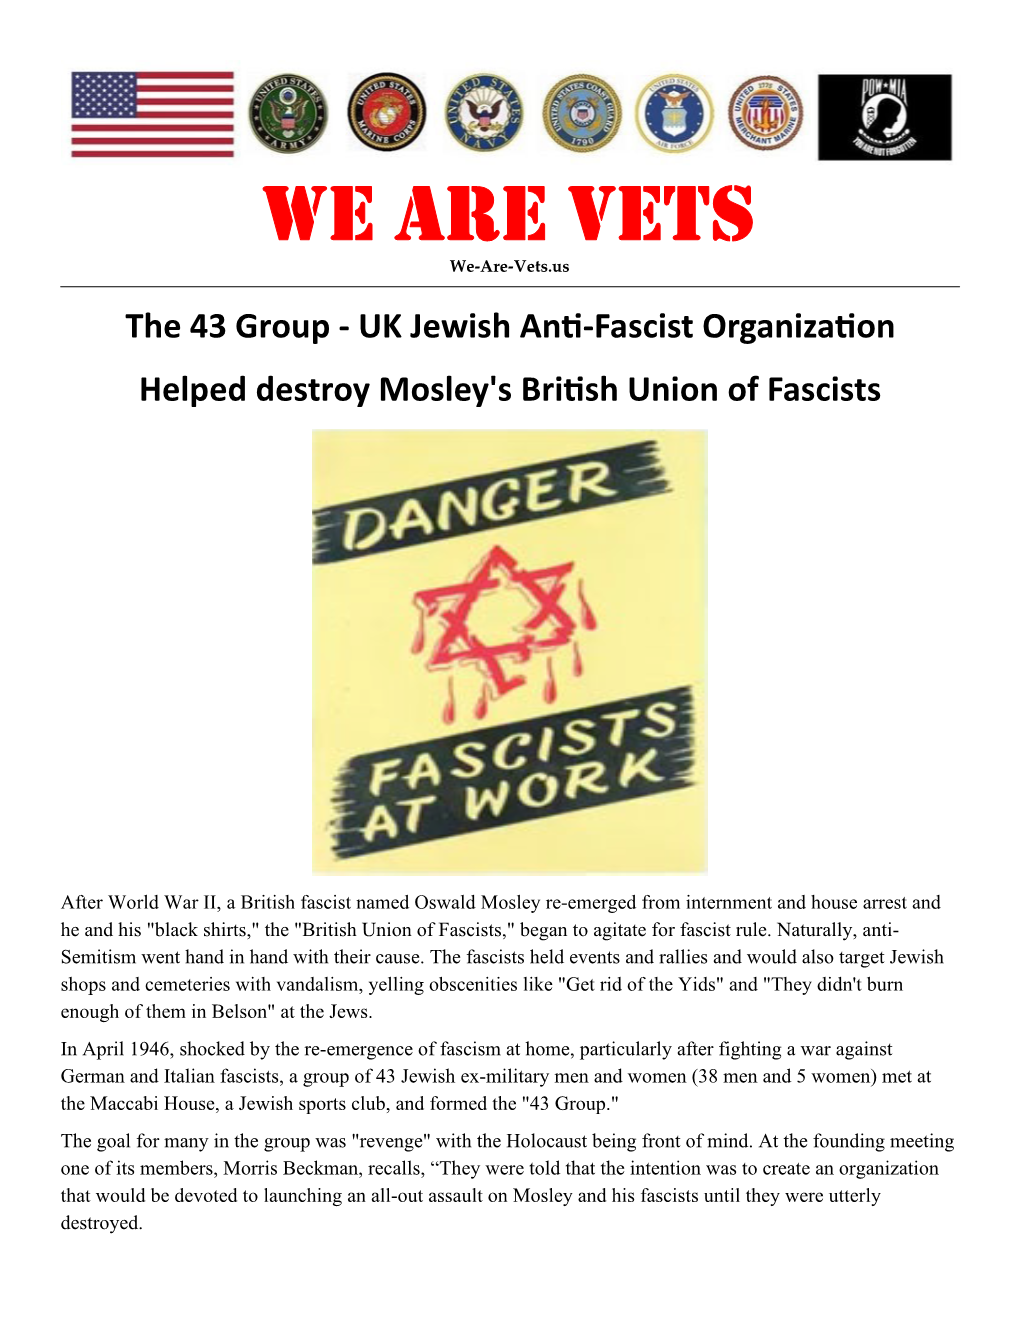 The 43 Group - UK Jewish An�-Fascist Organiza�On Helped Destroy Mosley's Bri�Sh Union of Fascists